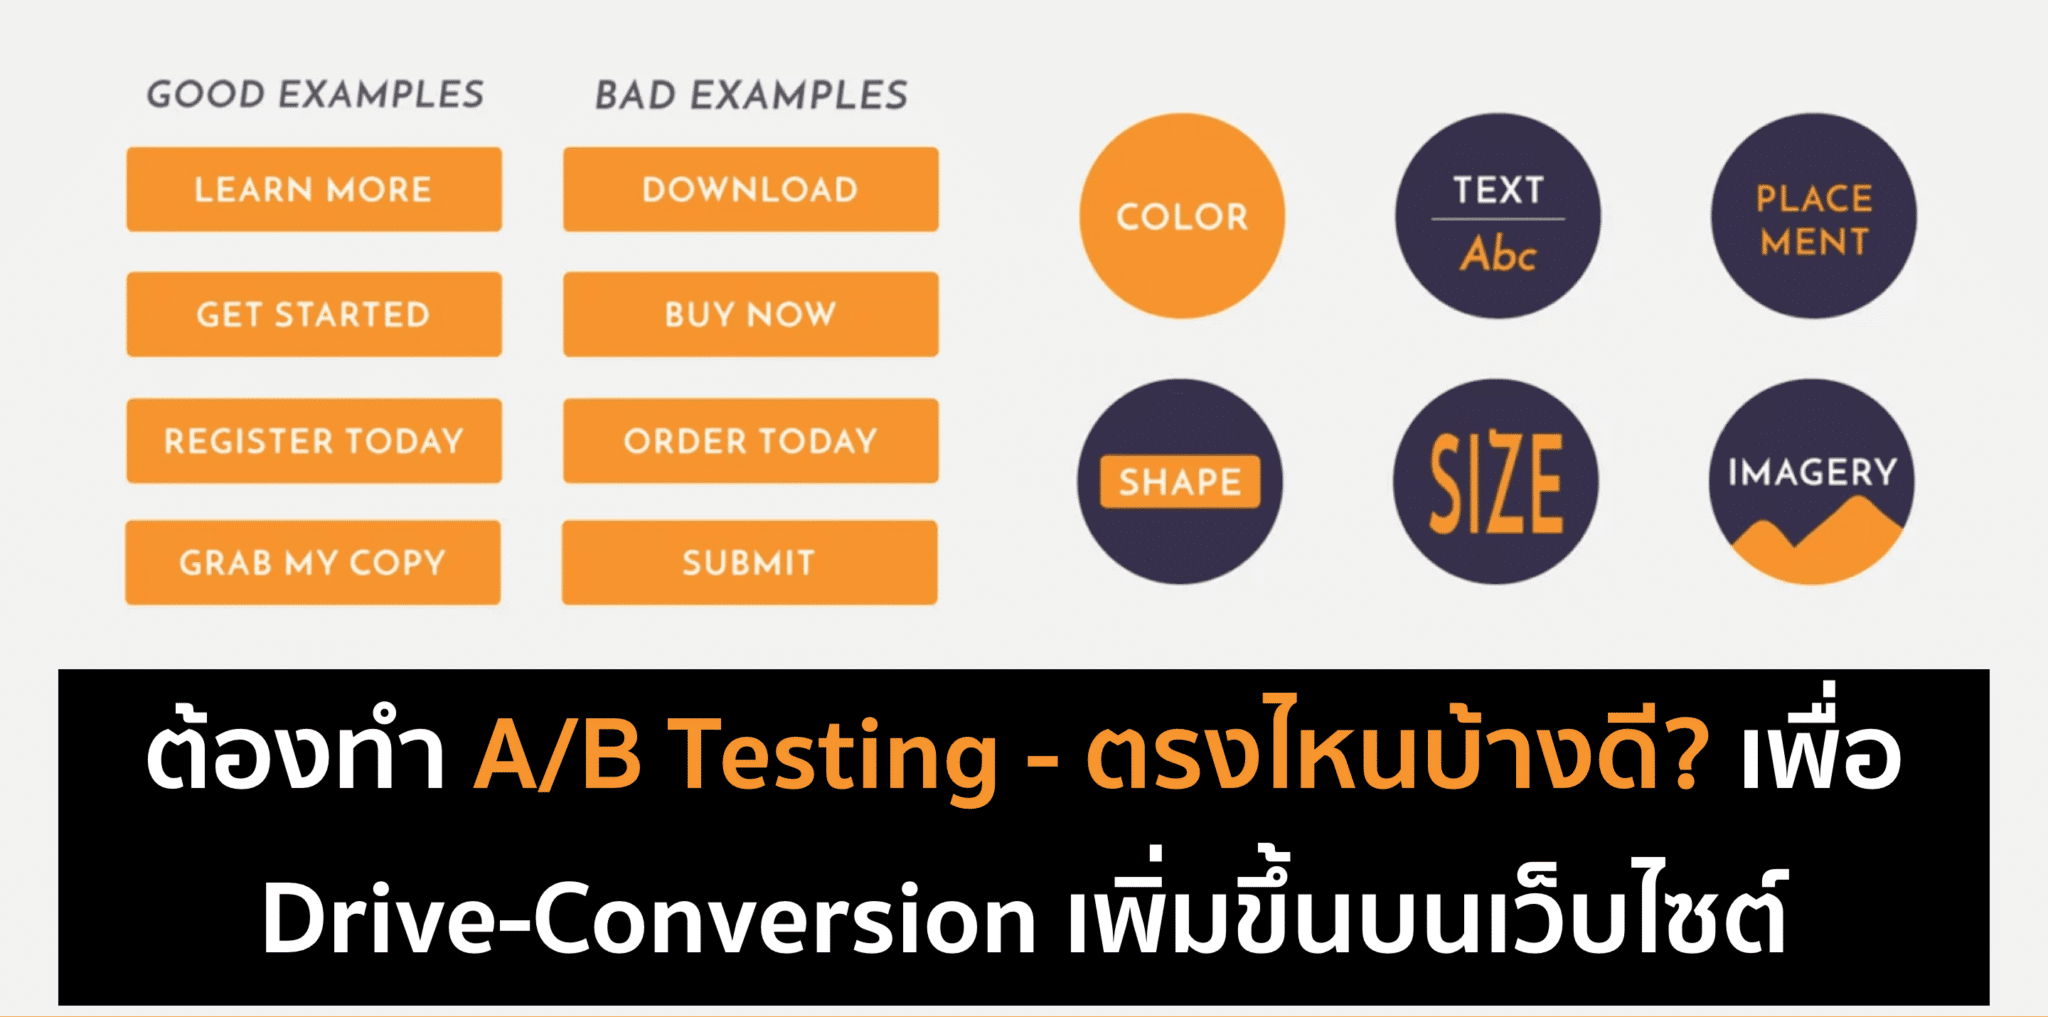 A/B Testing บนเว็บไซต์ ควรทดลองอะไรบ้างเพื่อ Conversion?